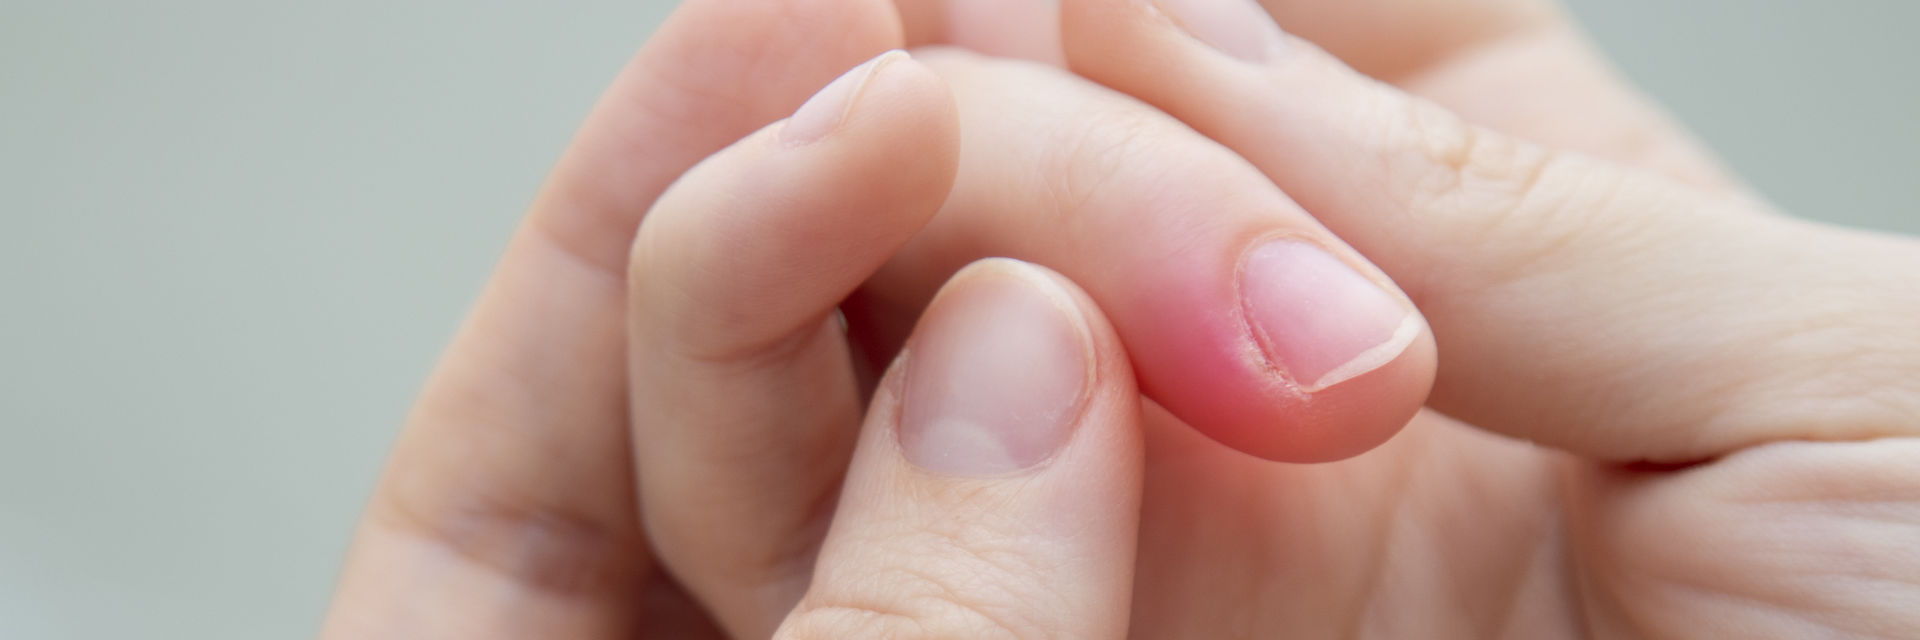 West Palm Beach Finger Pain Causes, Treatment | Wellington Finger Injury  Treatment